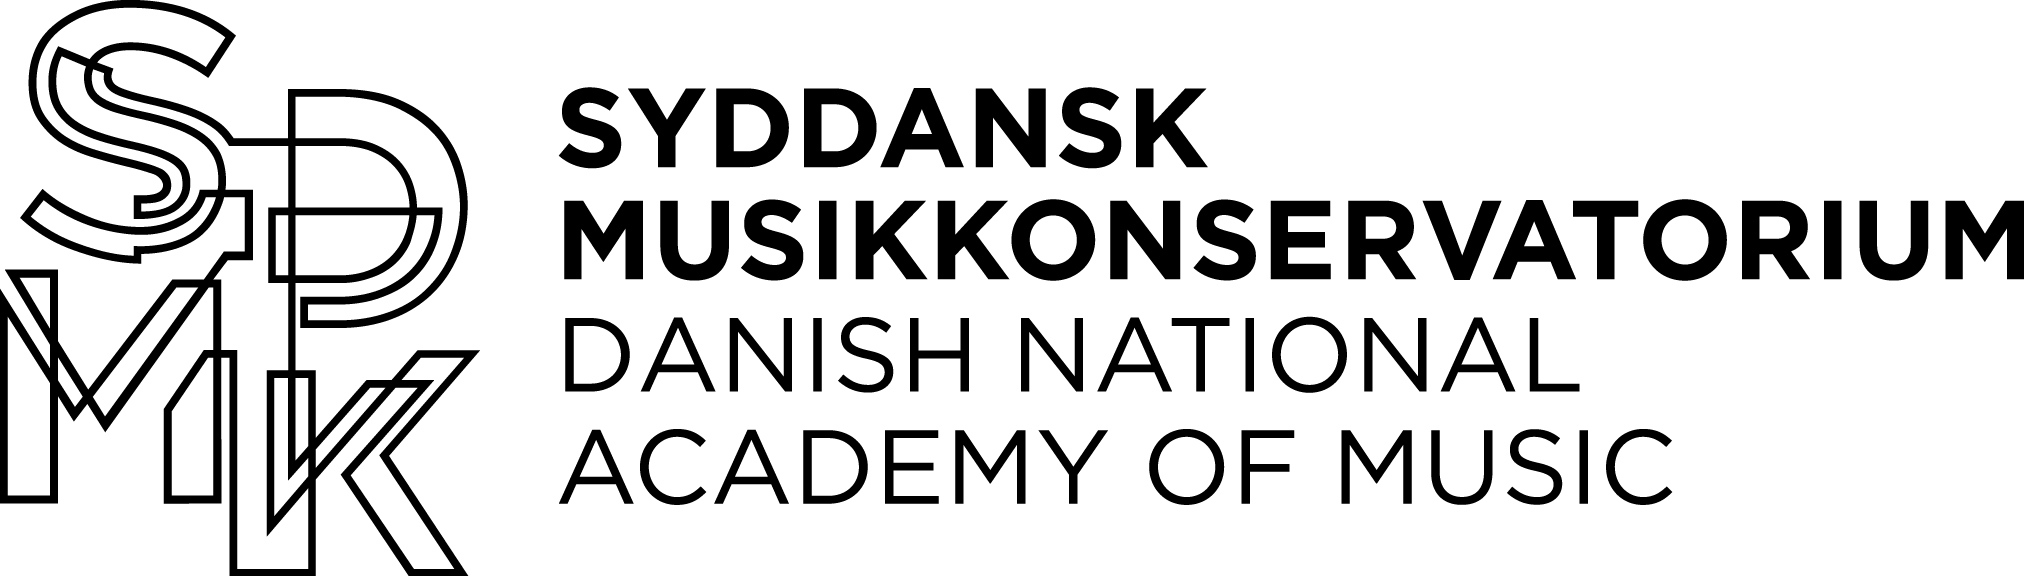 Danish National Academy of Music (SDMK) logo